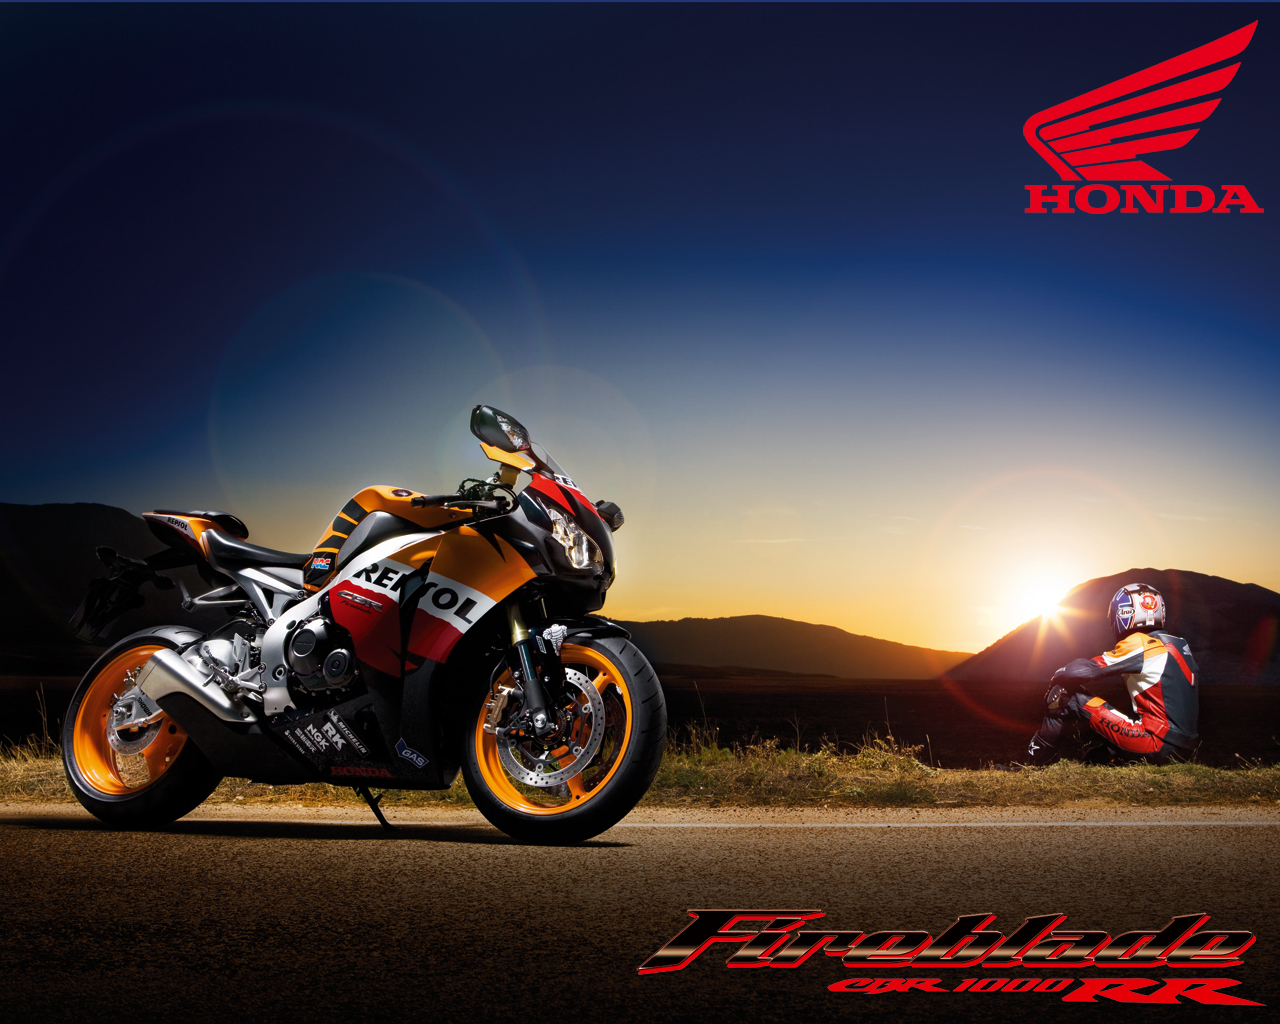 Honda Riding Wallpaper Honda Racing Hd Image